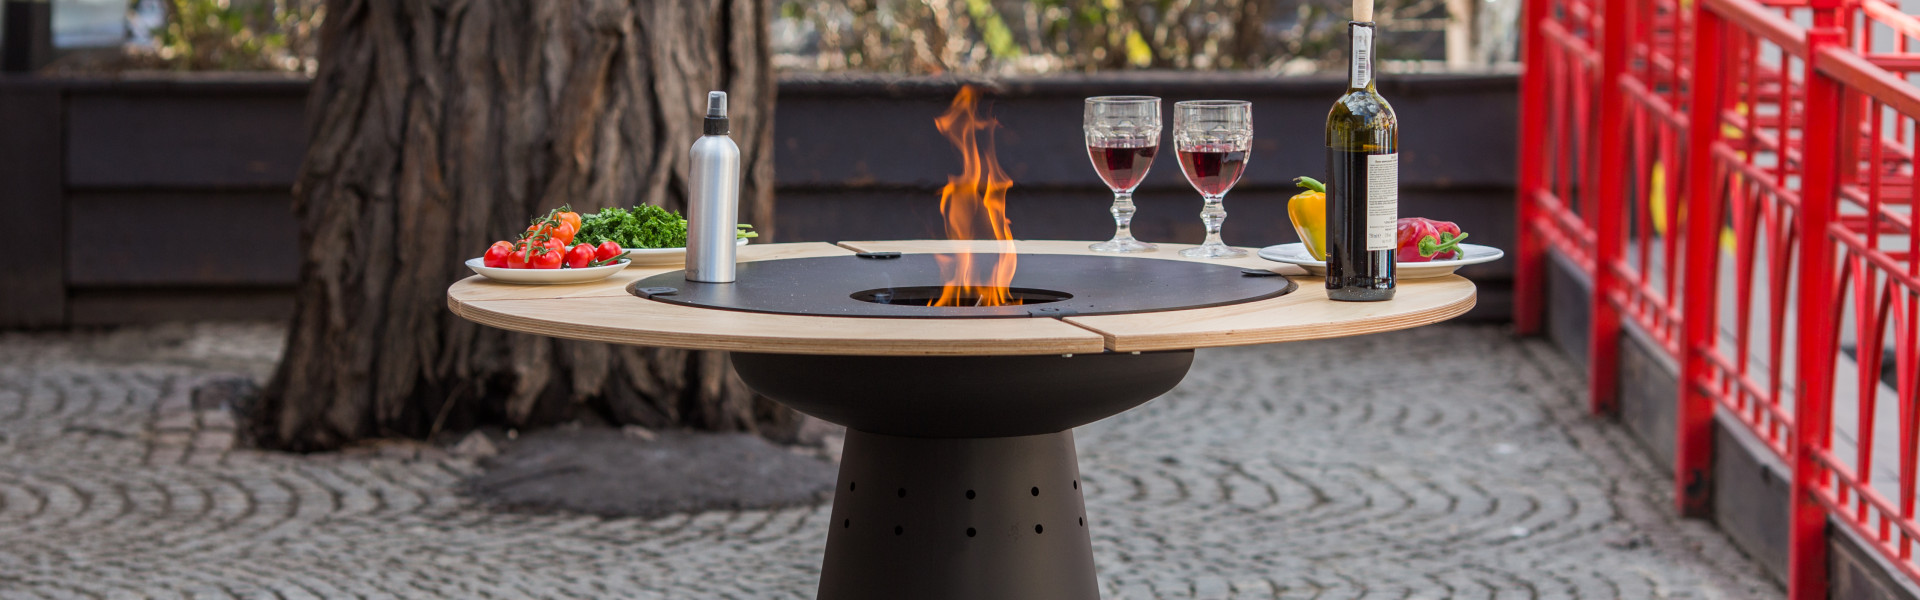 UNO TABLE: стол-совершенство для садового барбекю